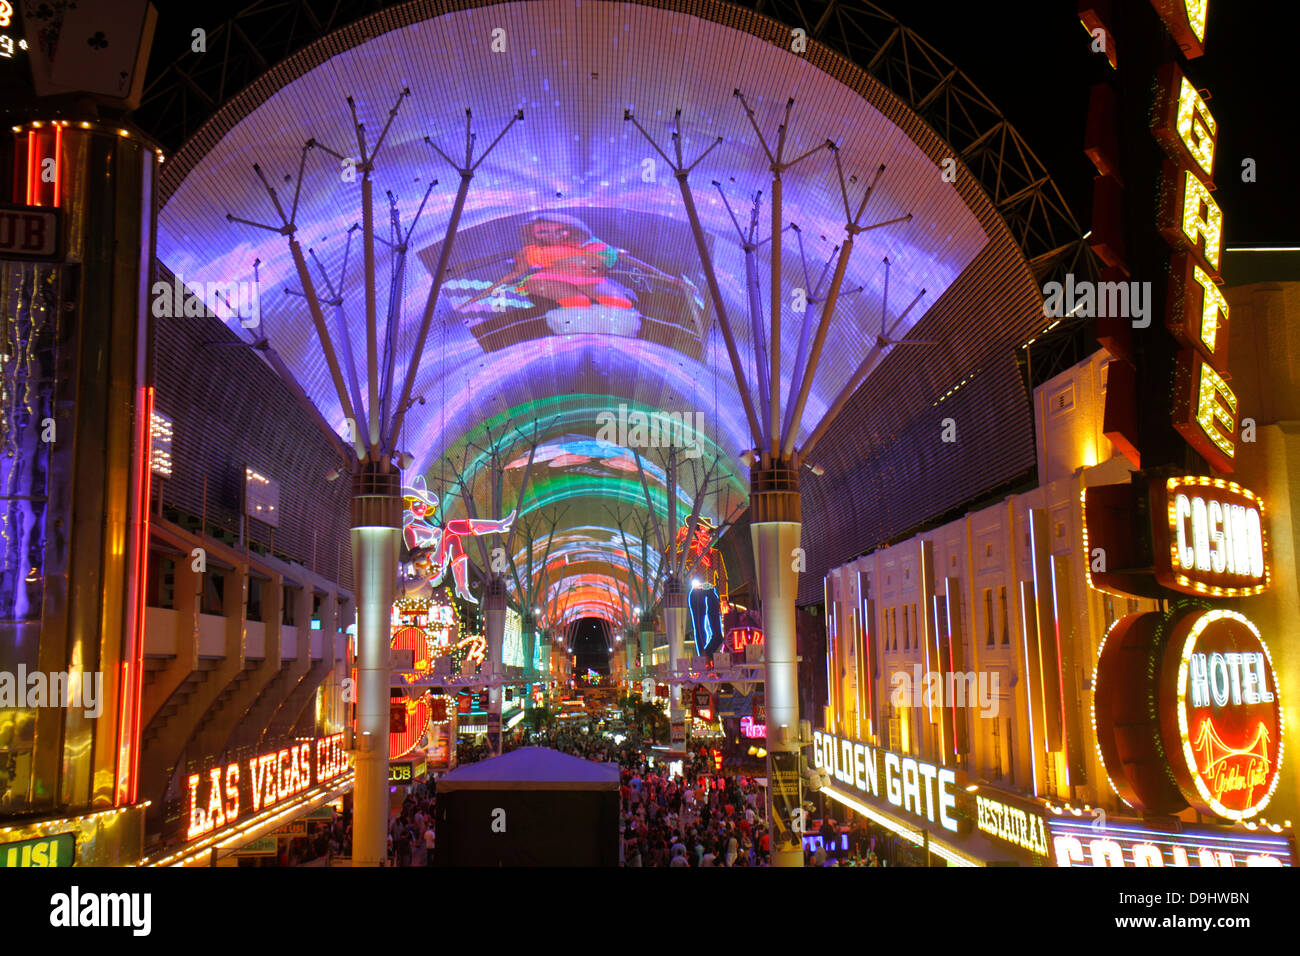 Las Vegas Nevada,Downtown,Fremont Street Experience,pedestrian mall,night evening,neon signs,Viva Vision canopy,light show,NV130329150 Stock Photo